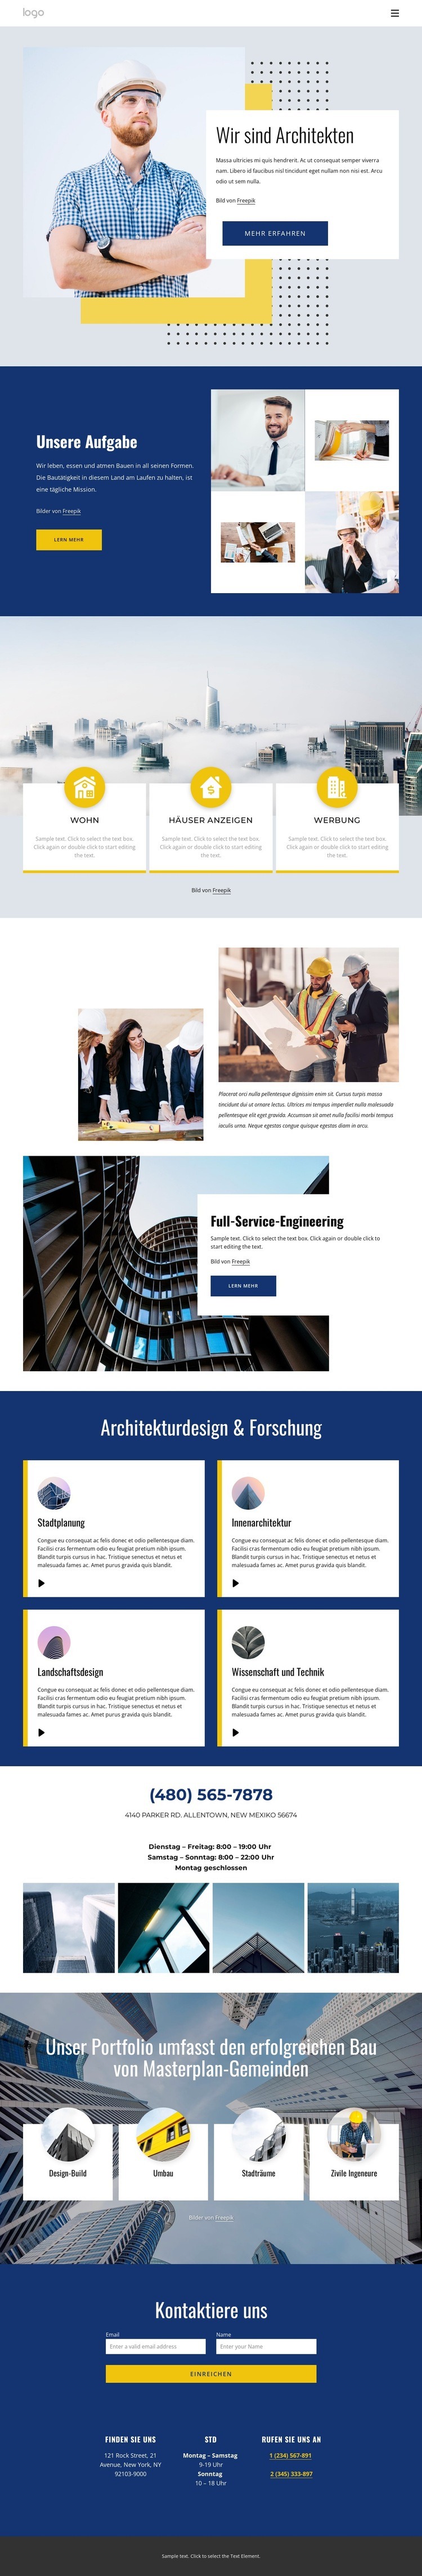 Architekturprojekte Landing Page